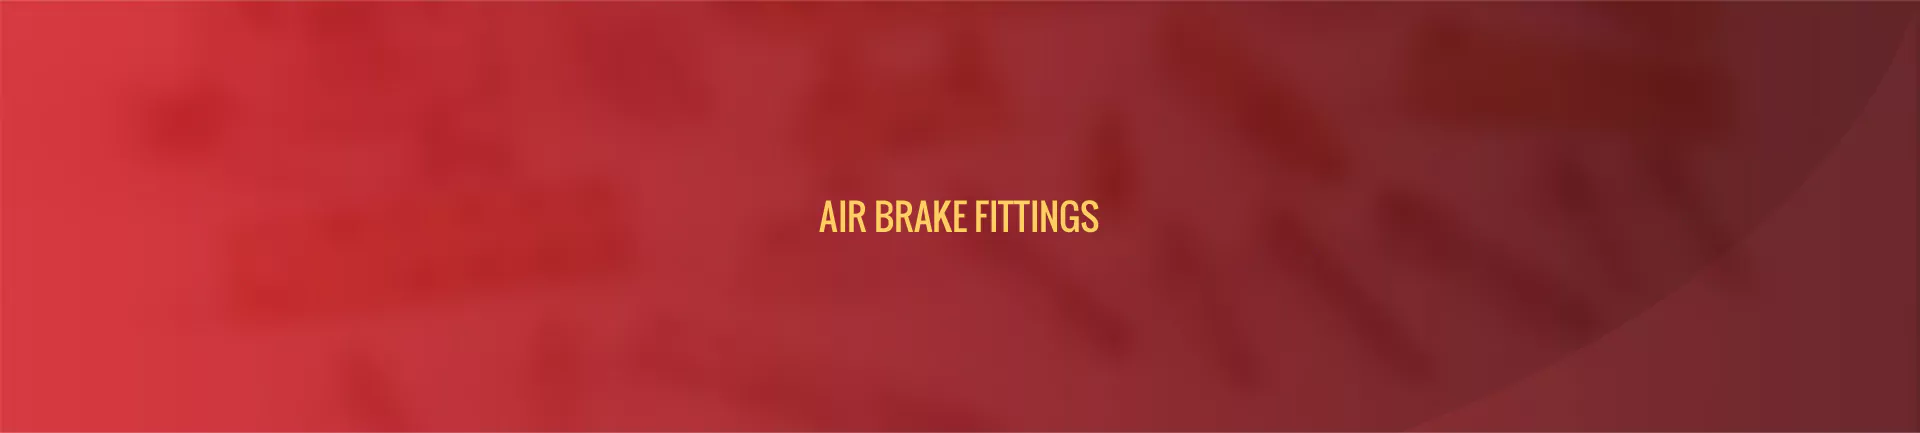 air-brake-fittings-banner